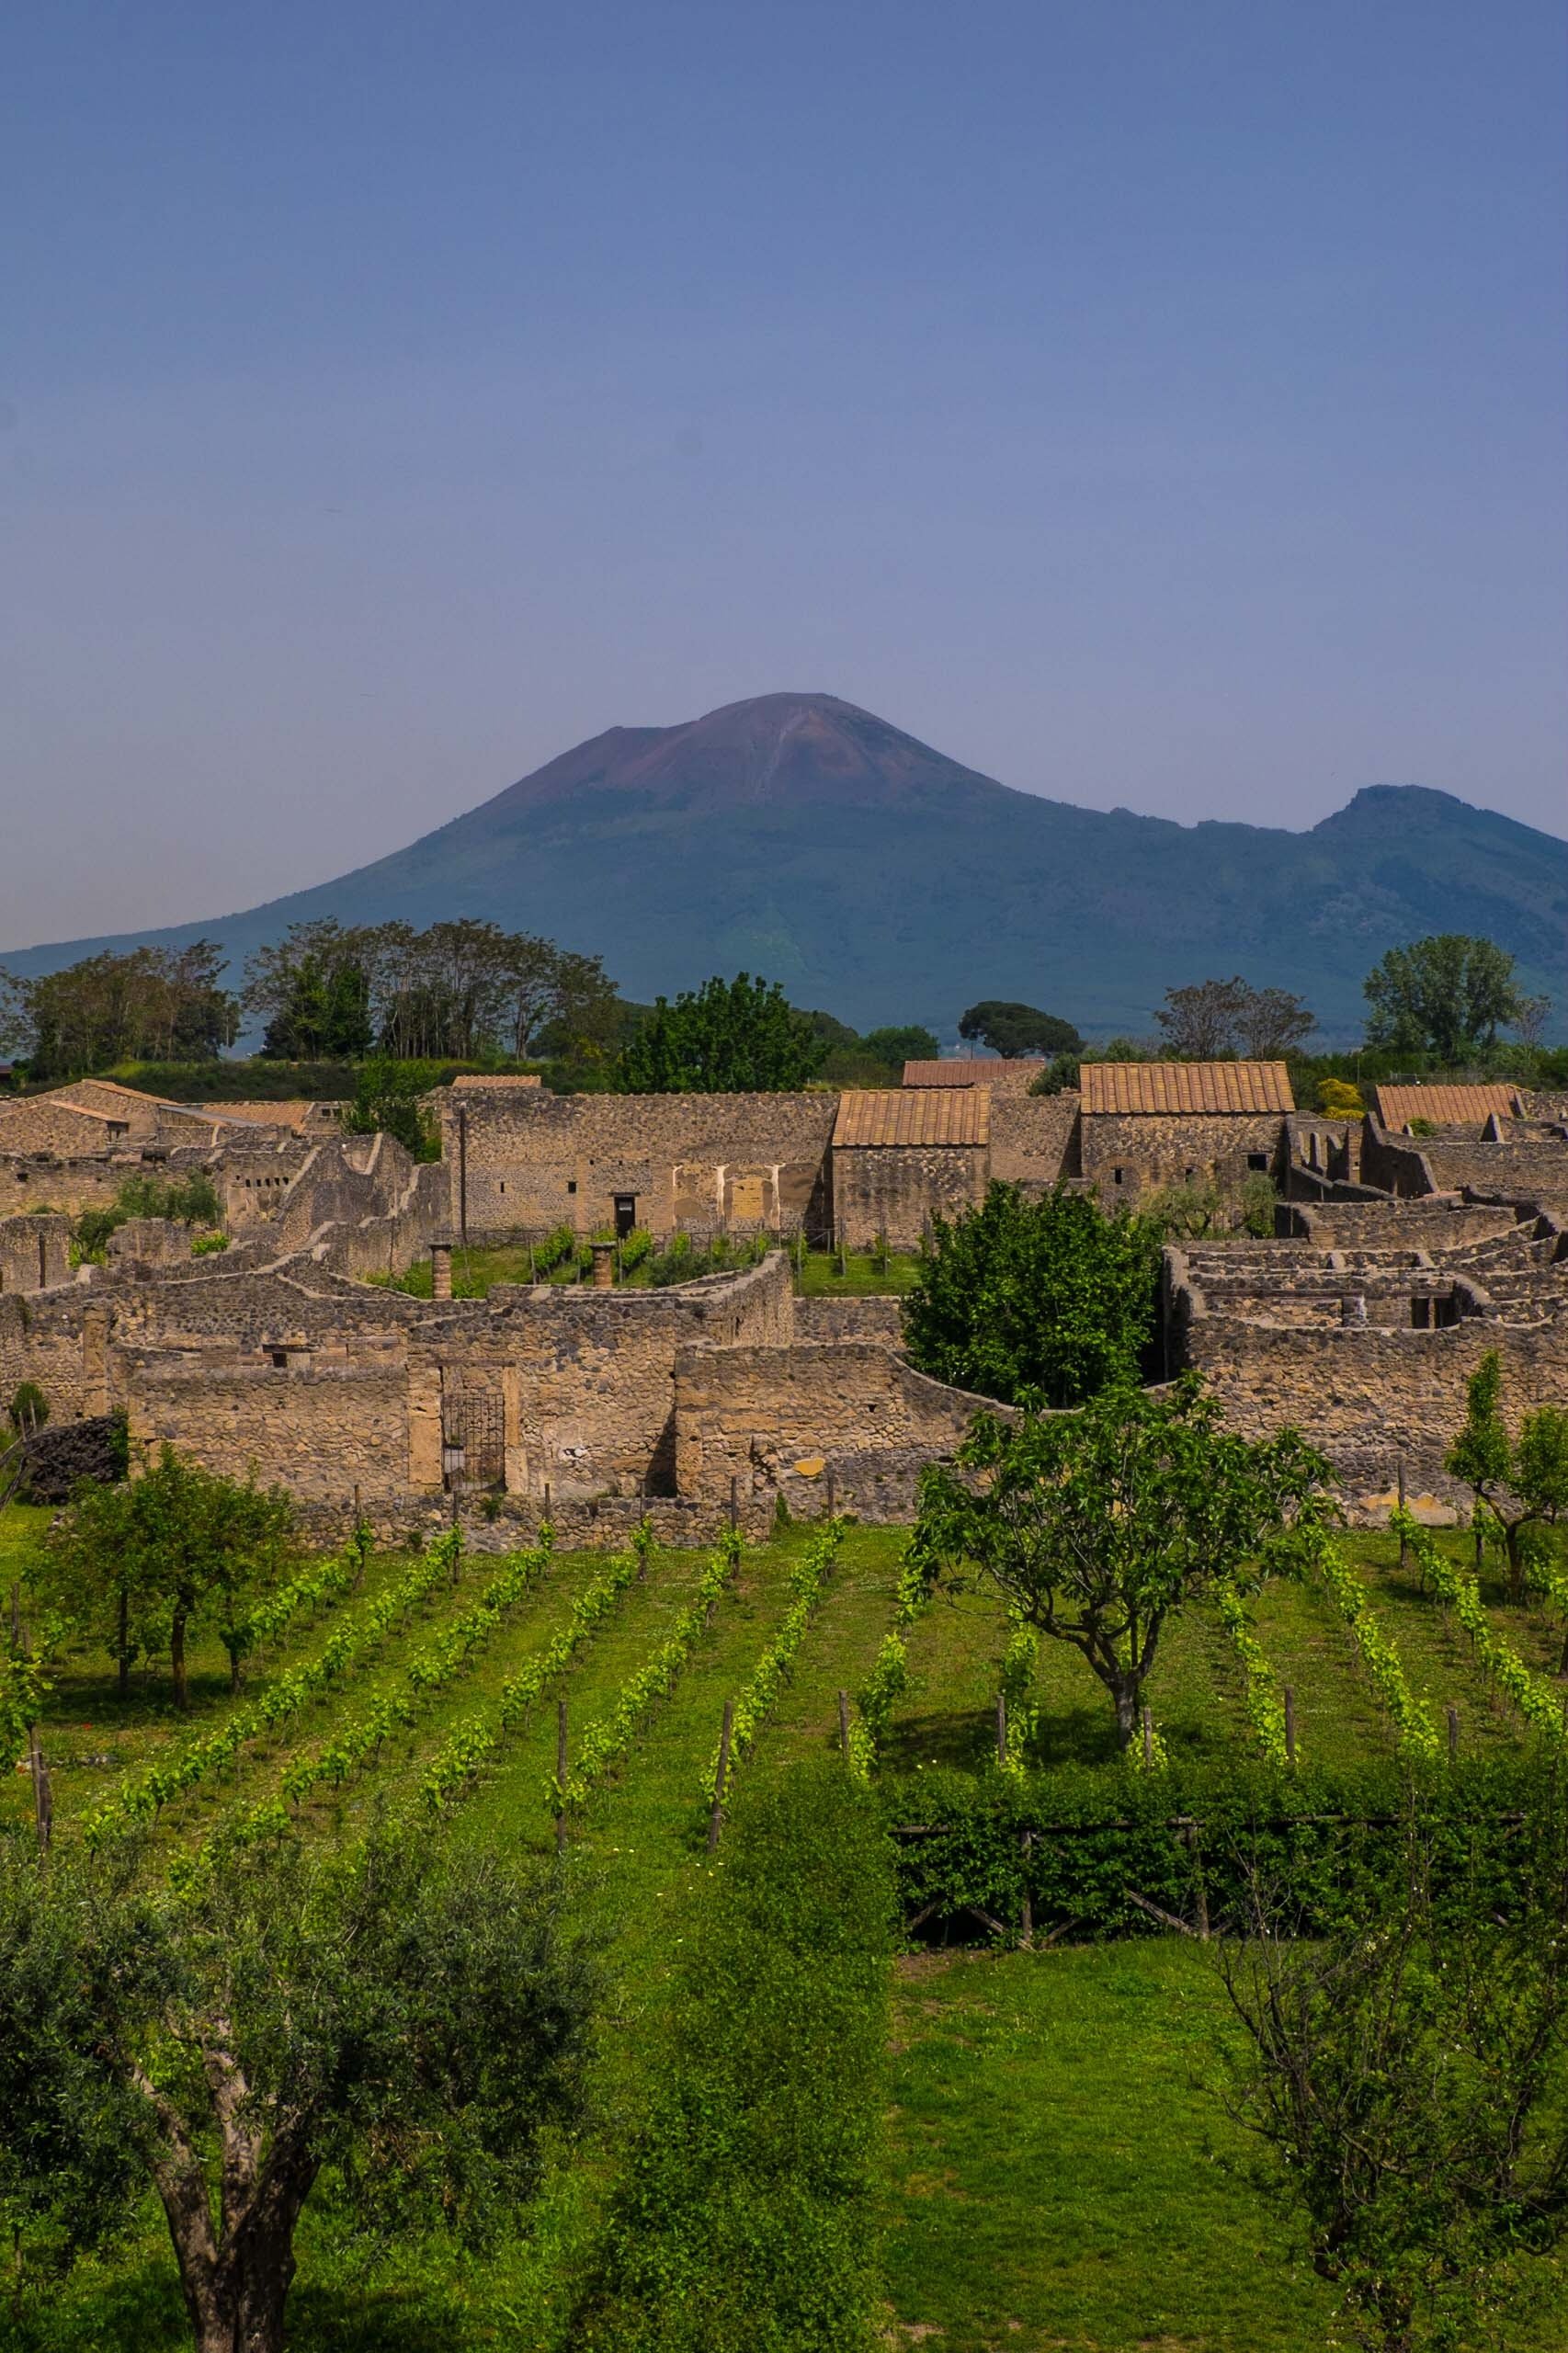  Roman vineyards in Pompeii, Vesuvius in rear |  ©John Szabo (published by Jacqui Small)  